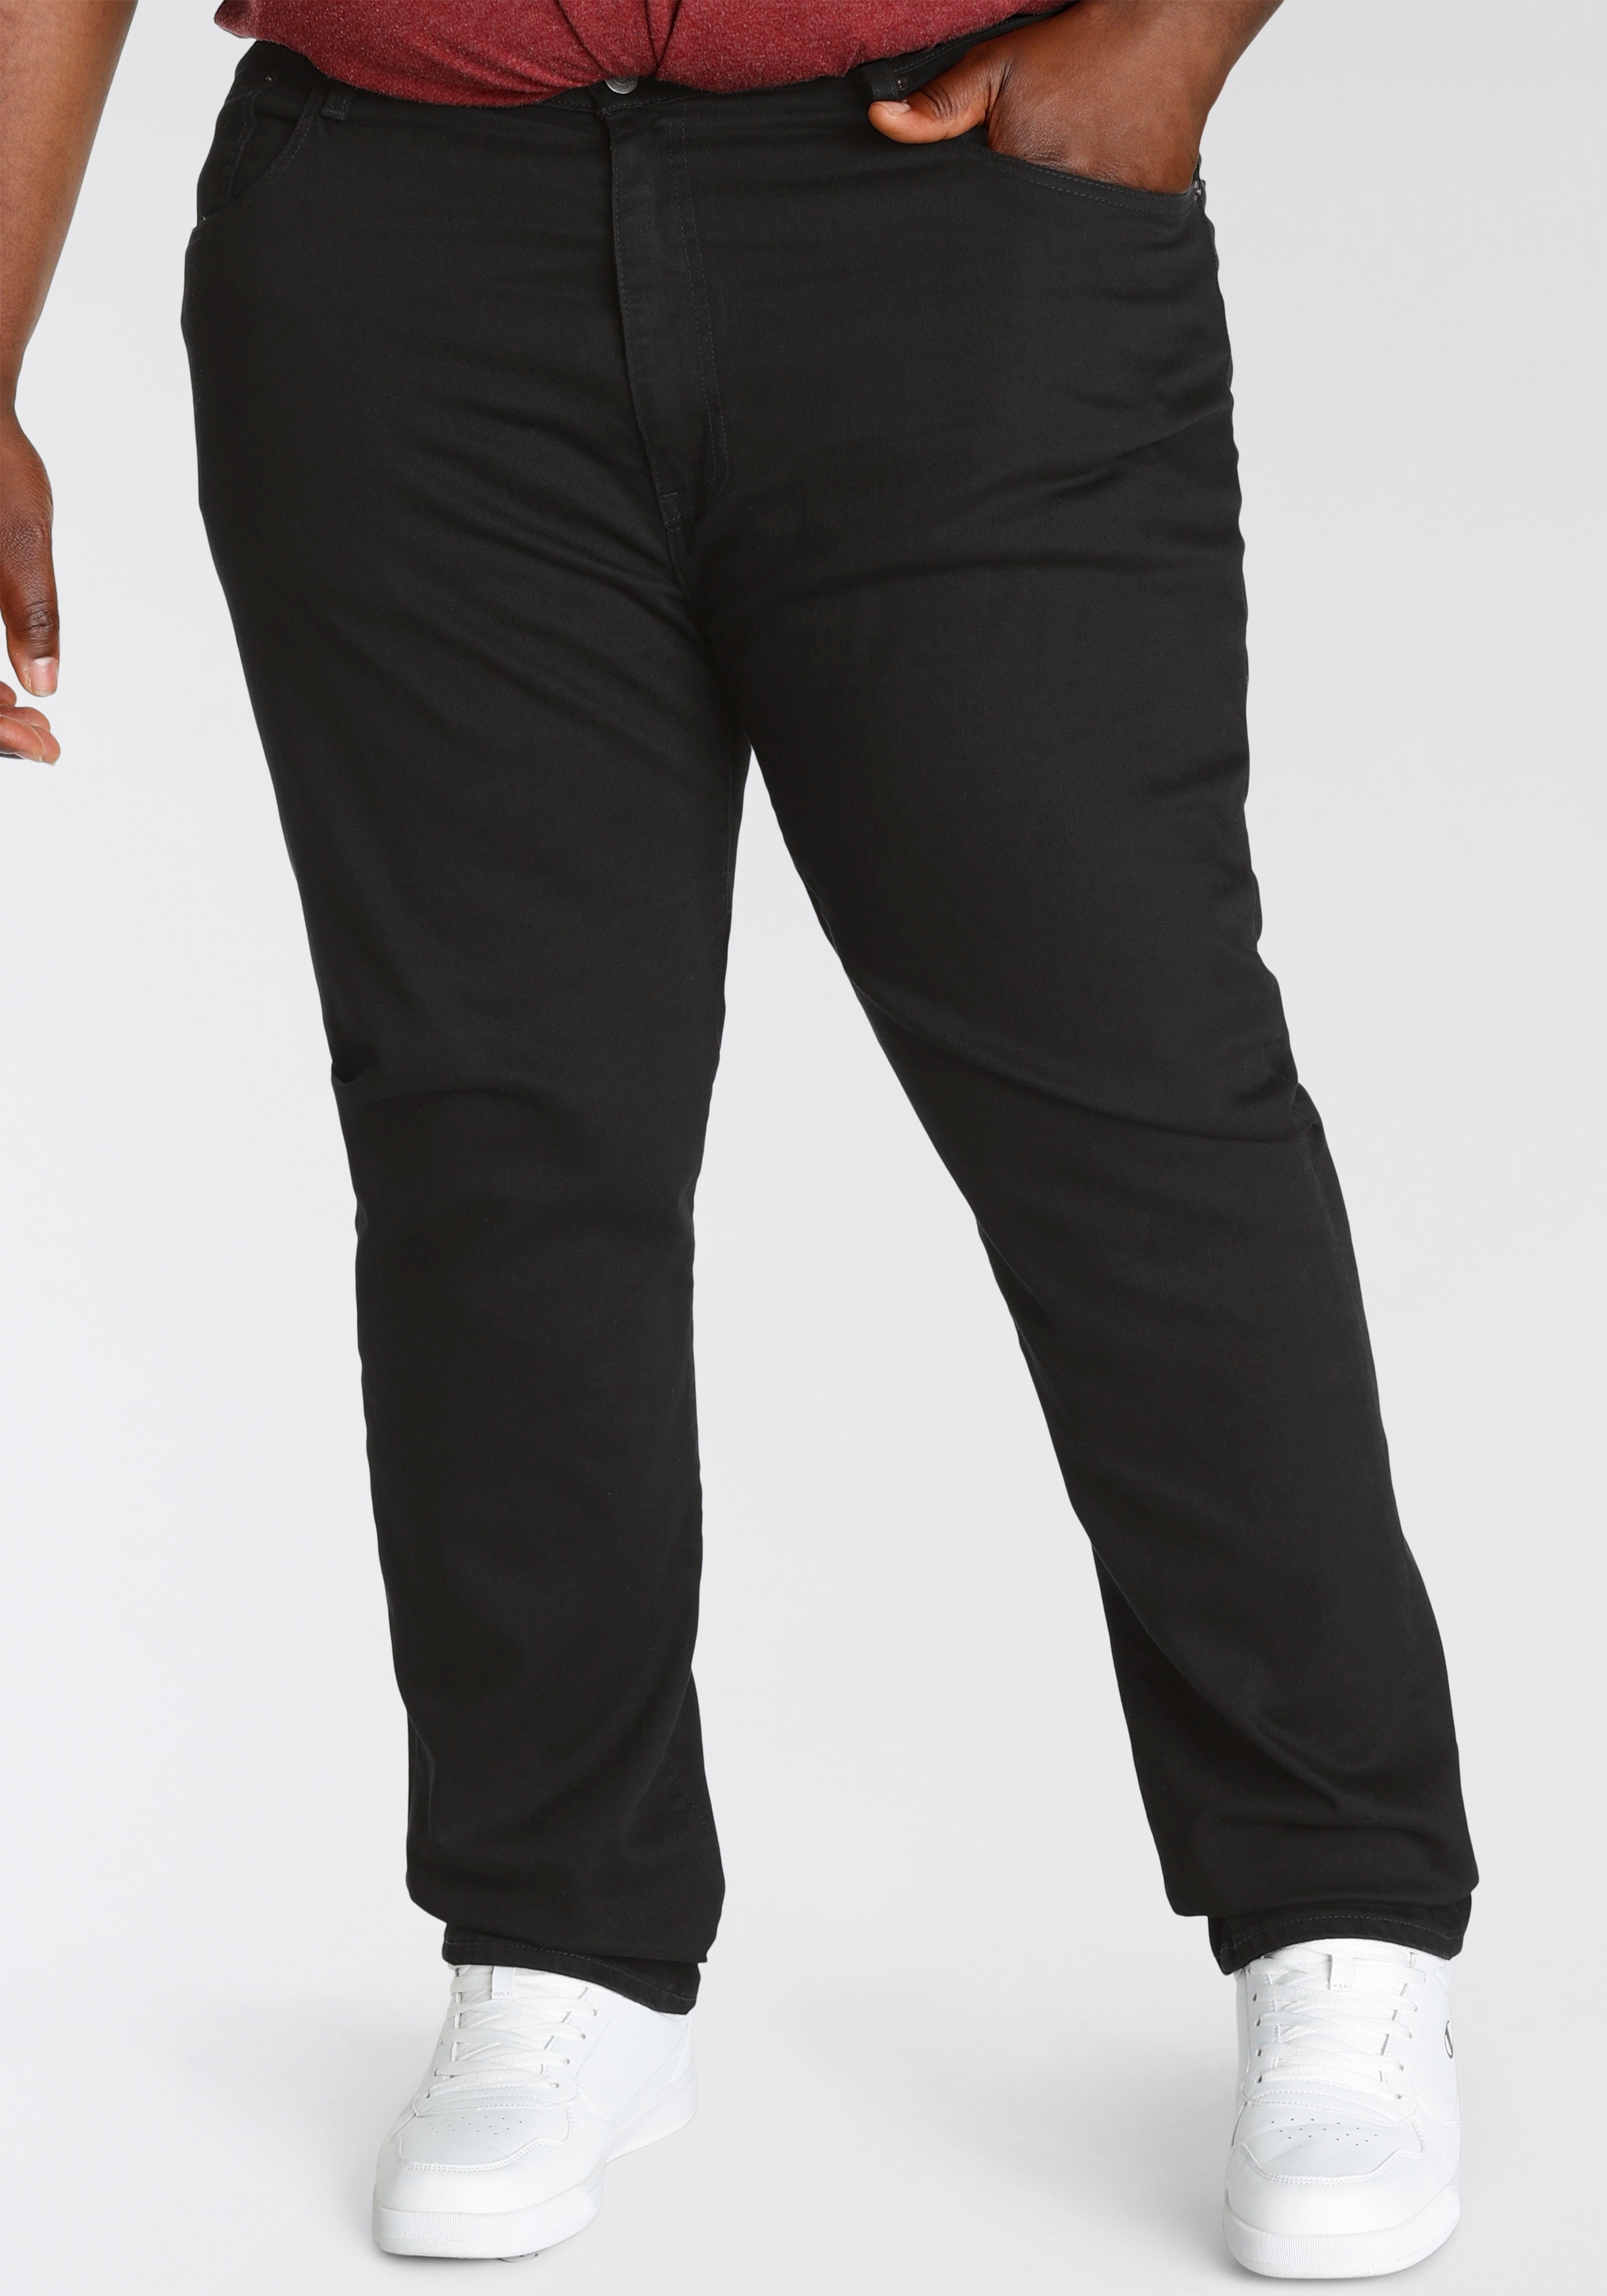 Tapered-fit-Jeans LEVI'S PLUS "512" Gr. 46, Länge 34, schwarz (black denim) Herren Jeans Tapered-Jeans